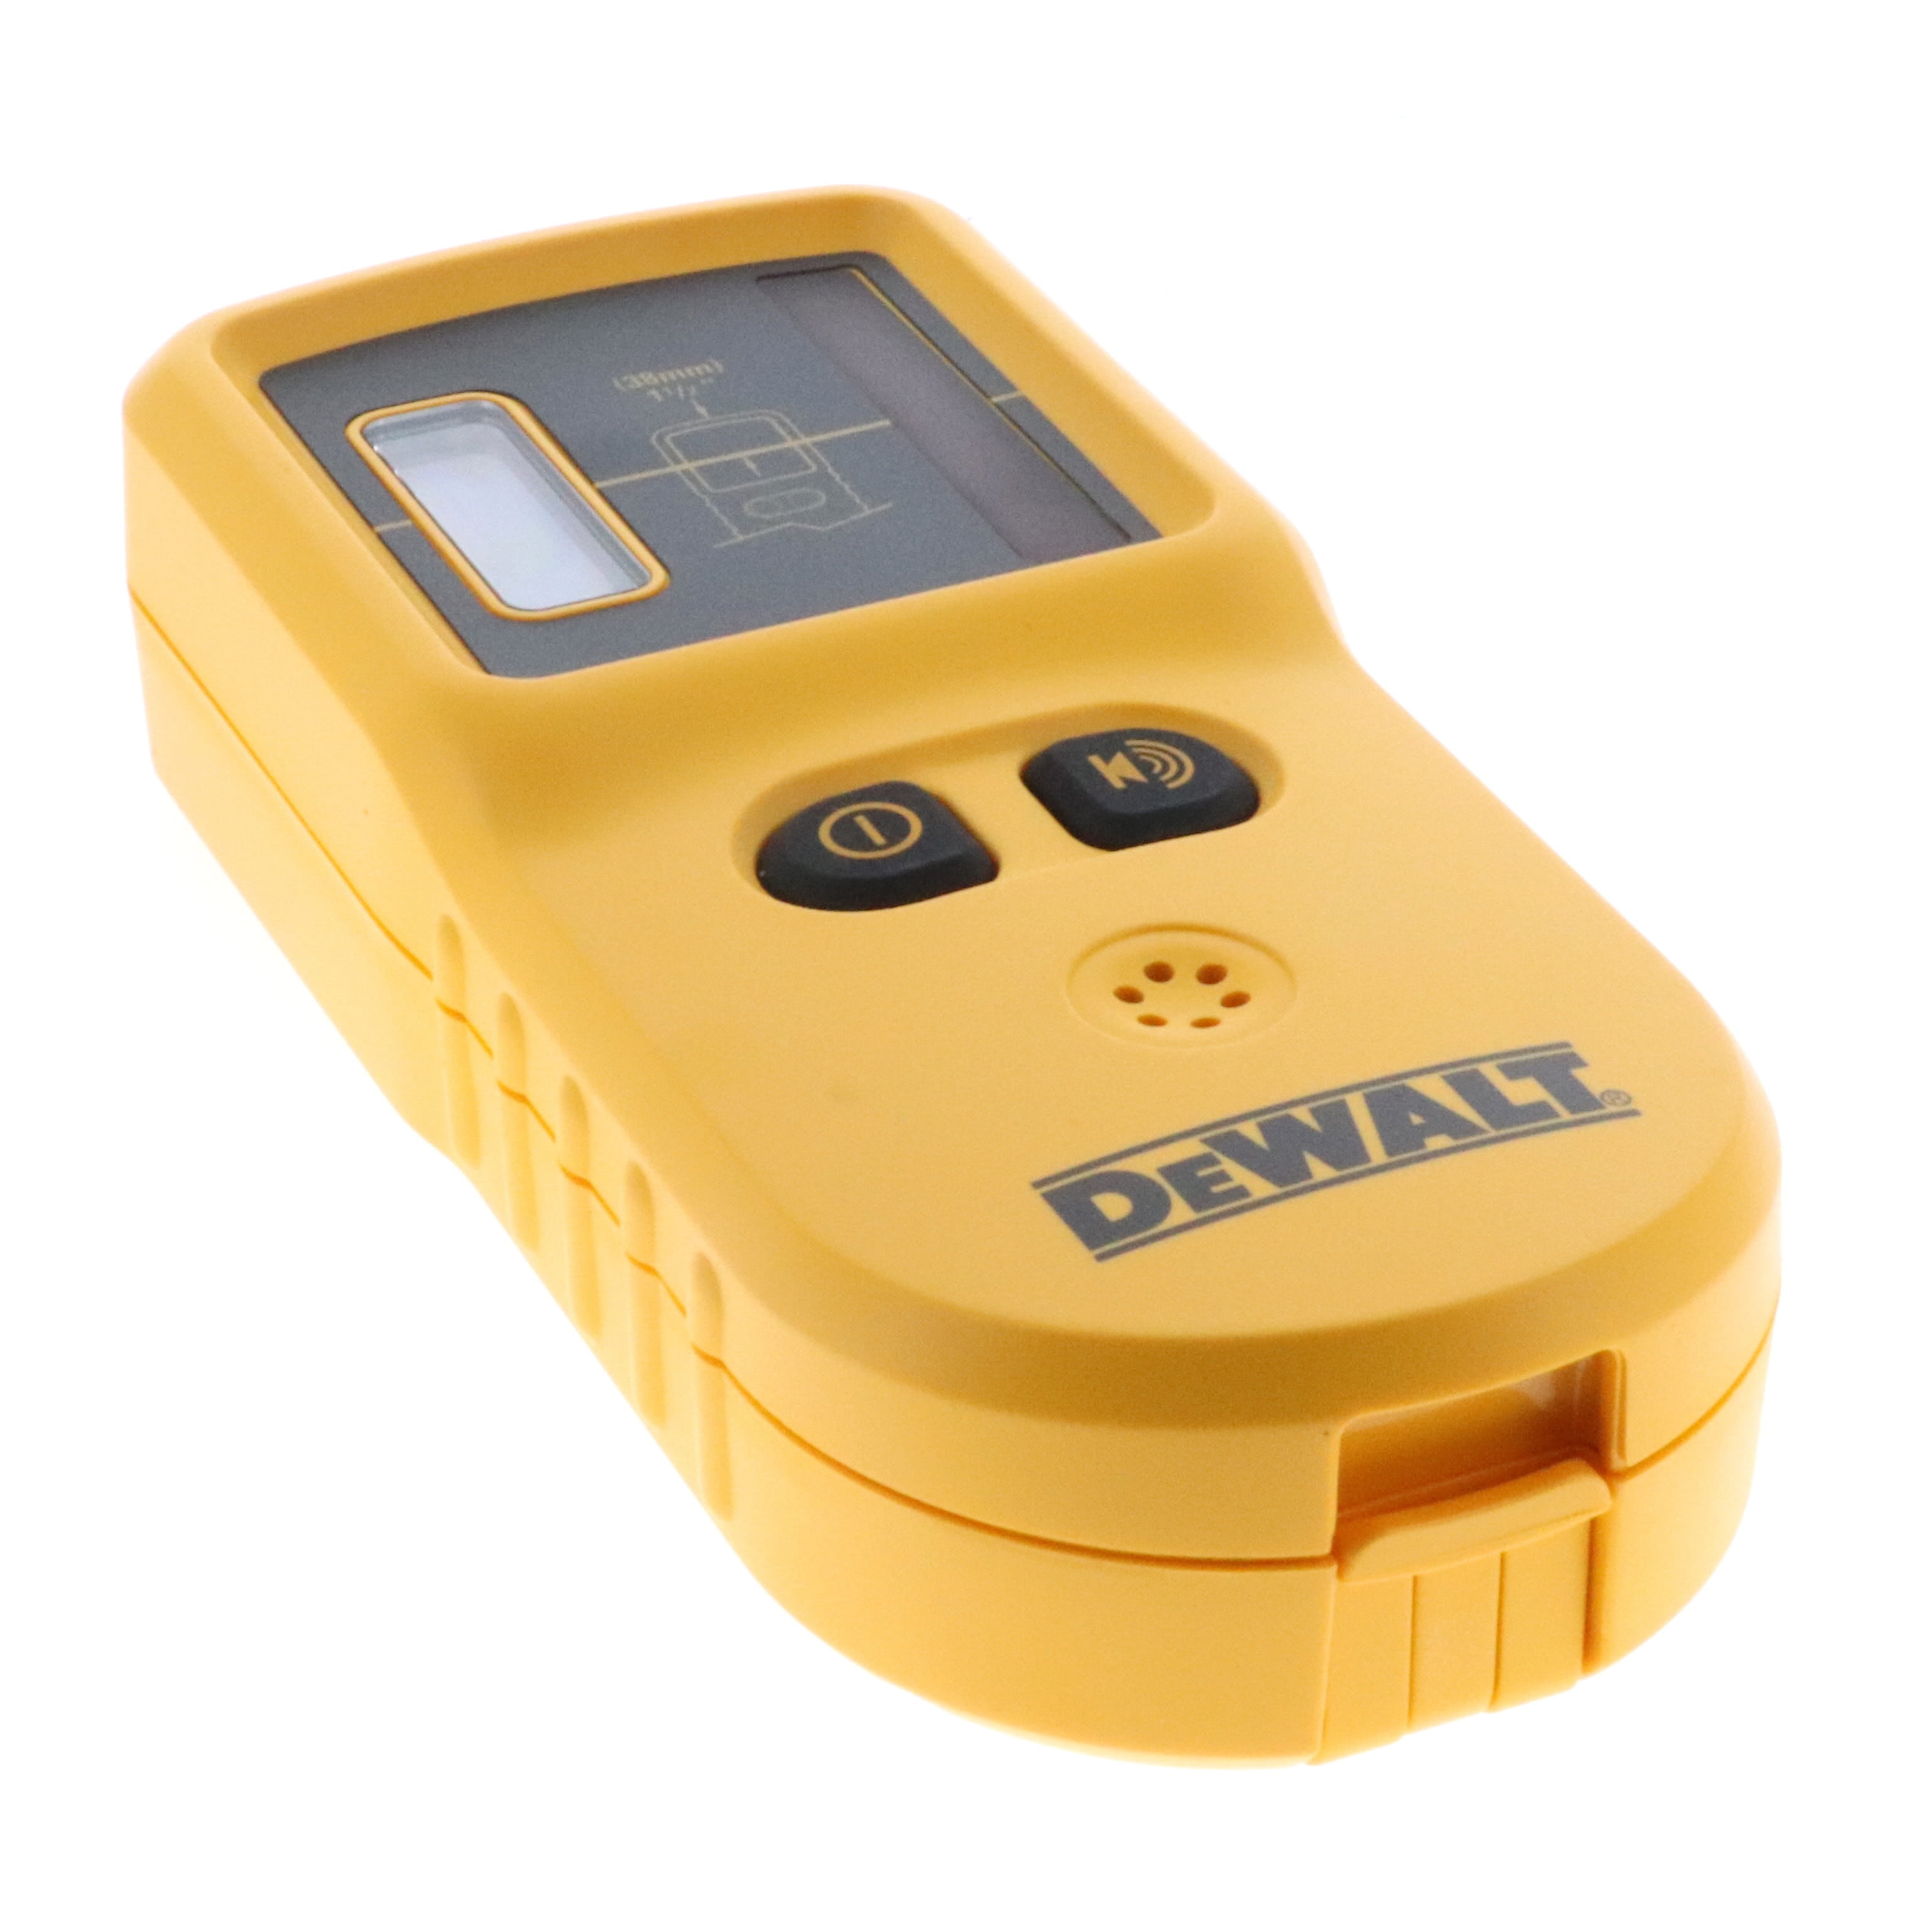 Bosch GMS120 Professional Detector (RENEWED) – JPT Tools